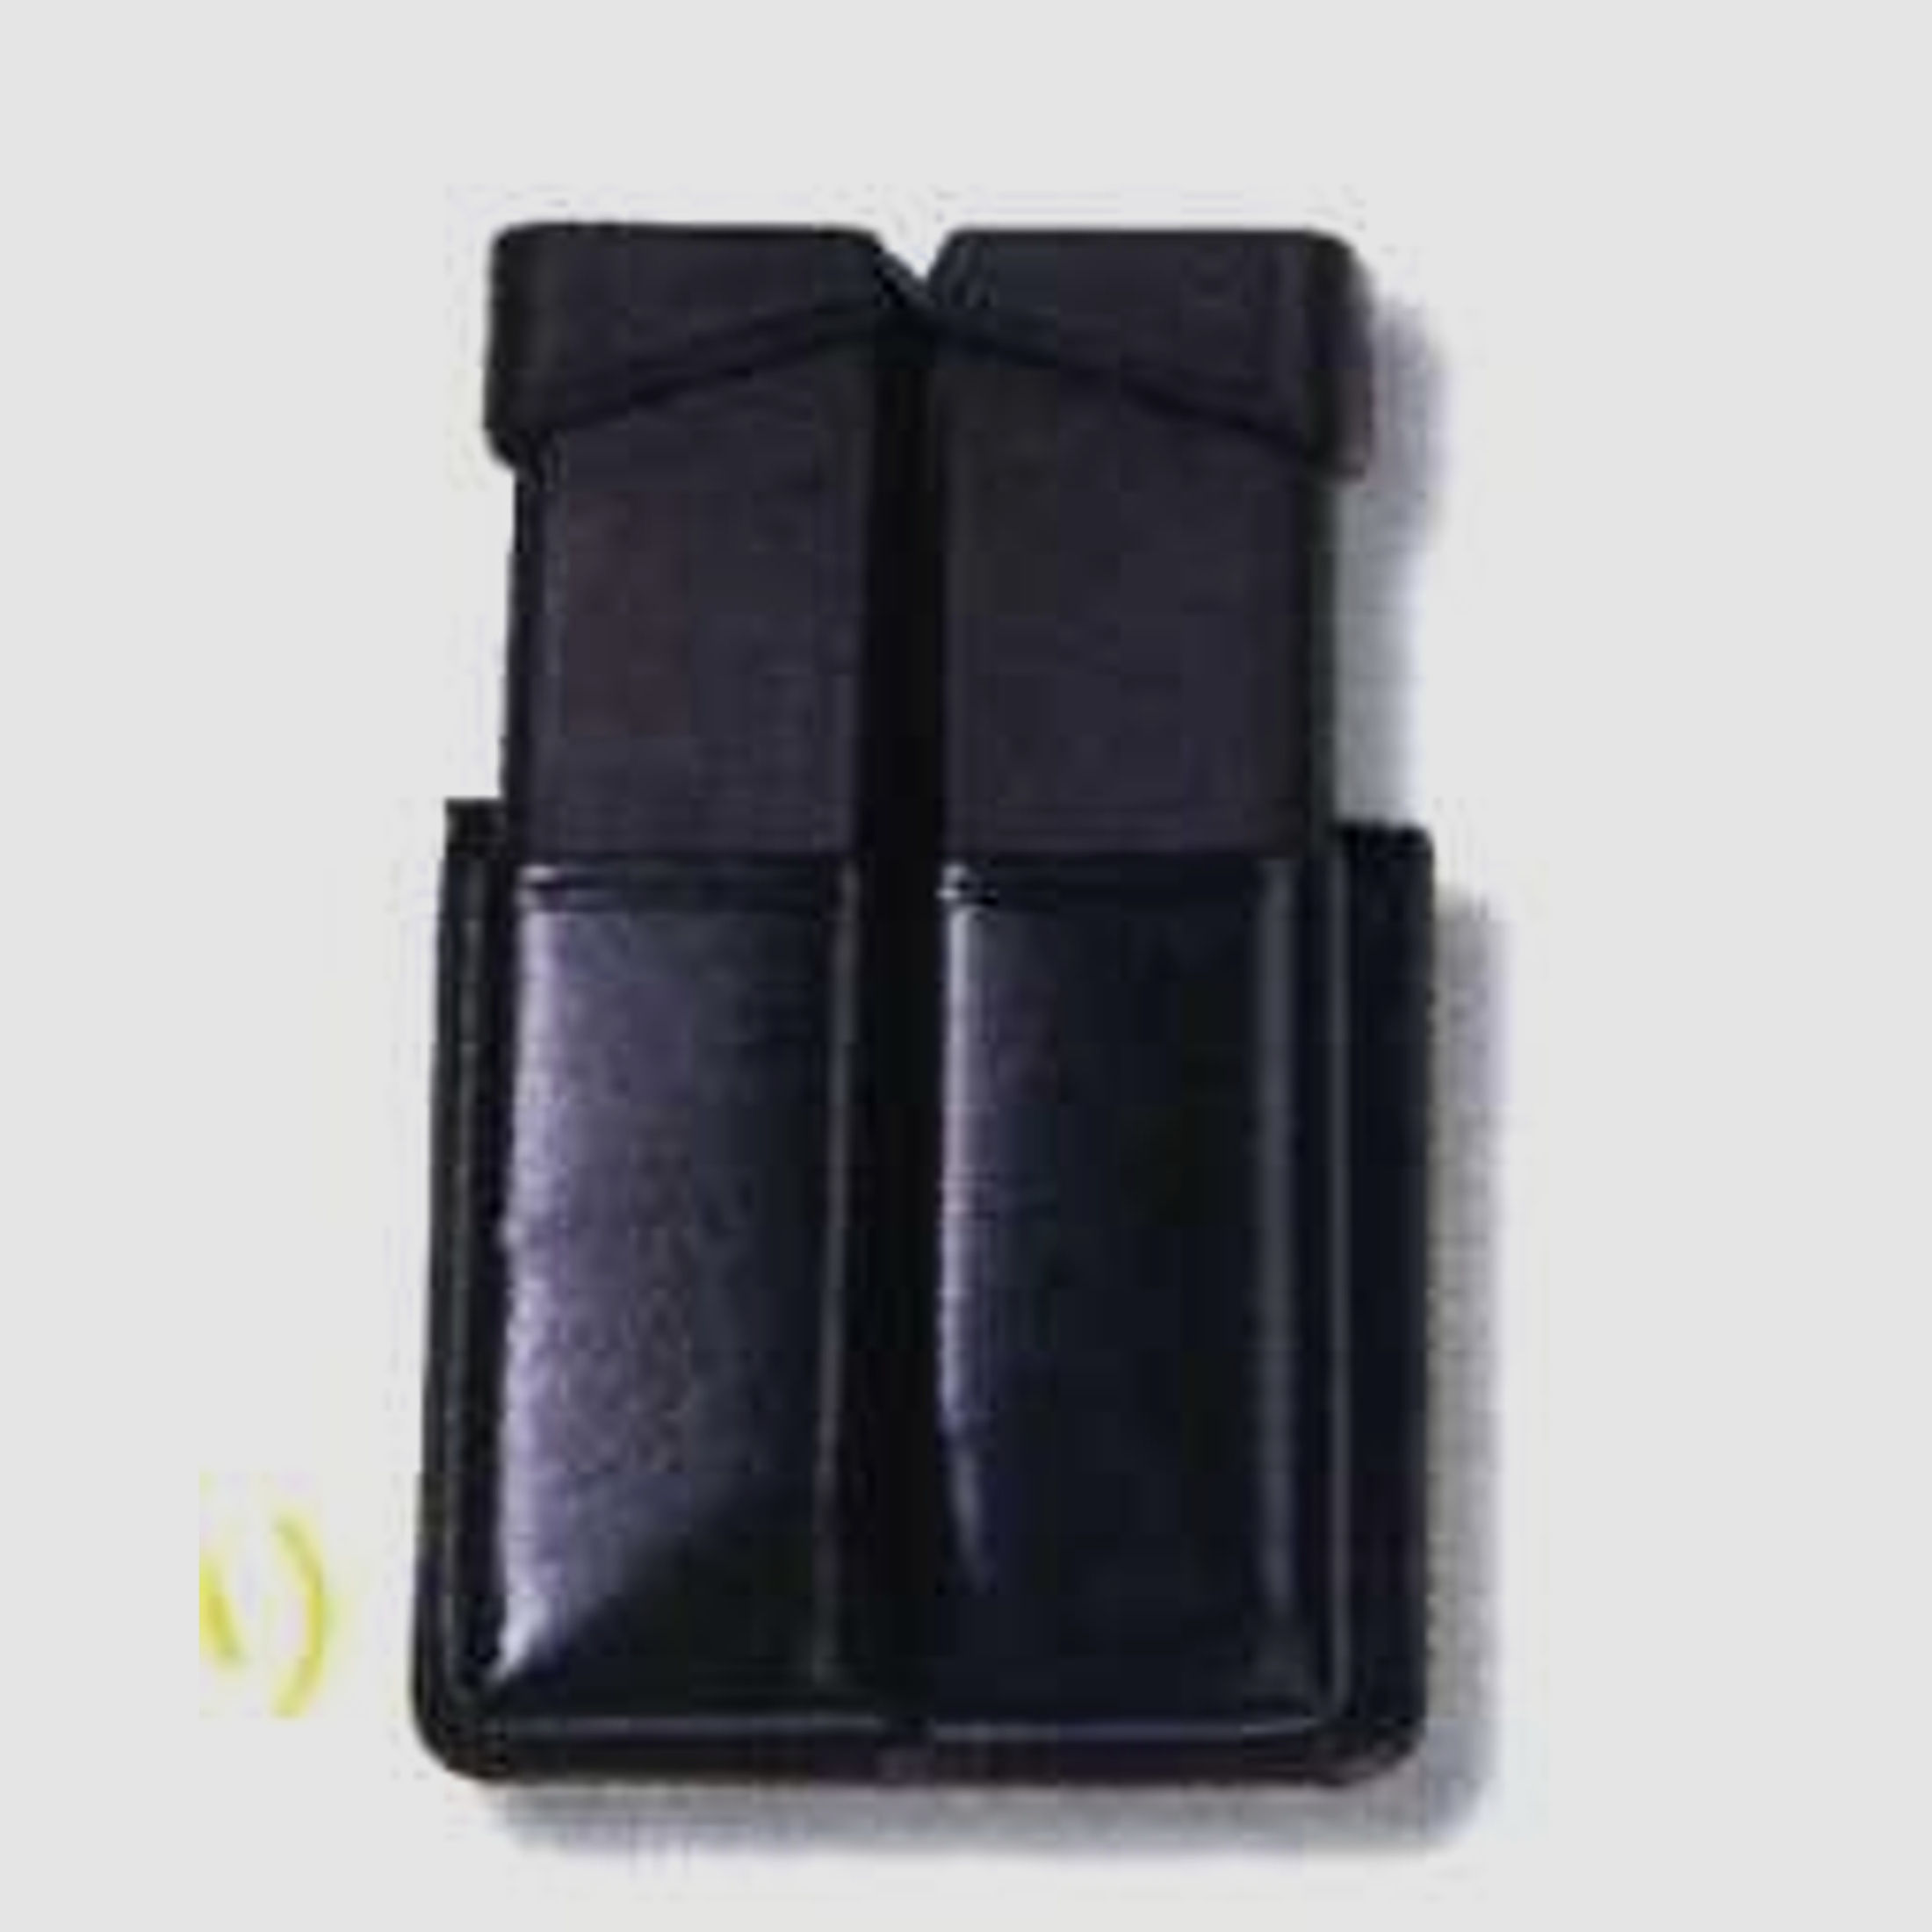 SICKINGER Magazintasche f. Glock 20/21 / HK45 62823 Twin Box schwarz